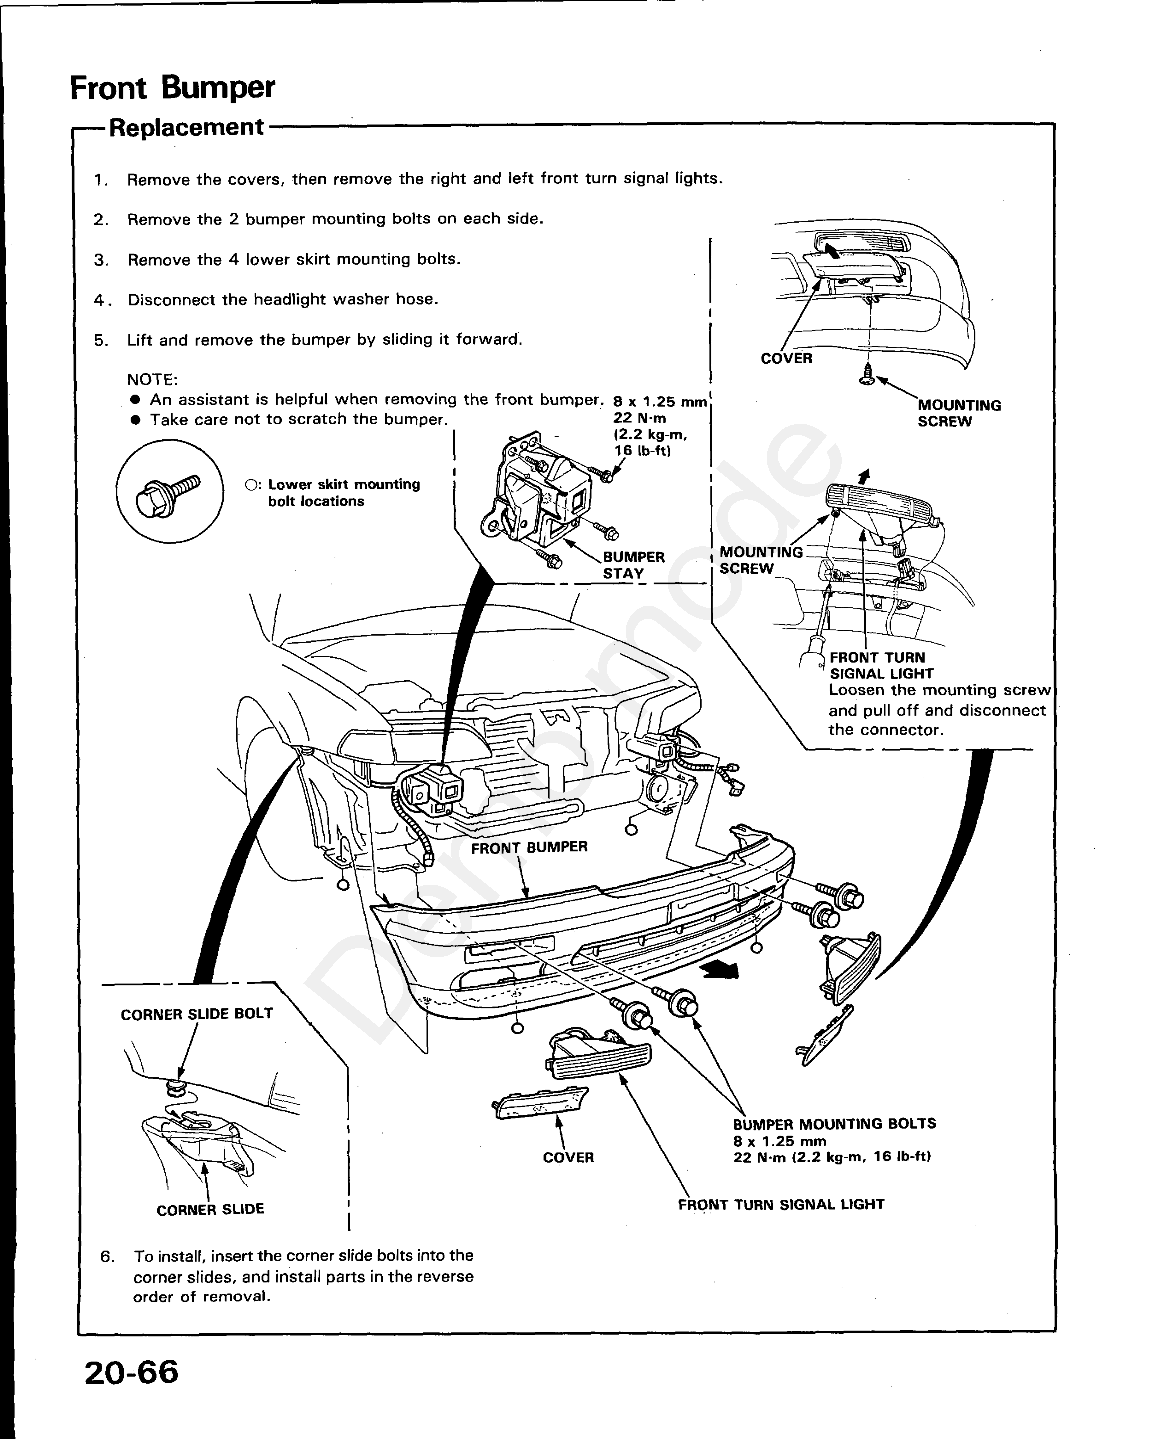 1994 Honda accord bumper removal #6